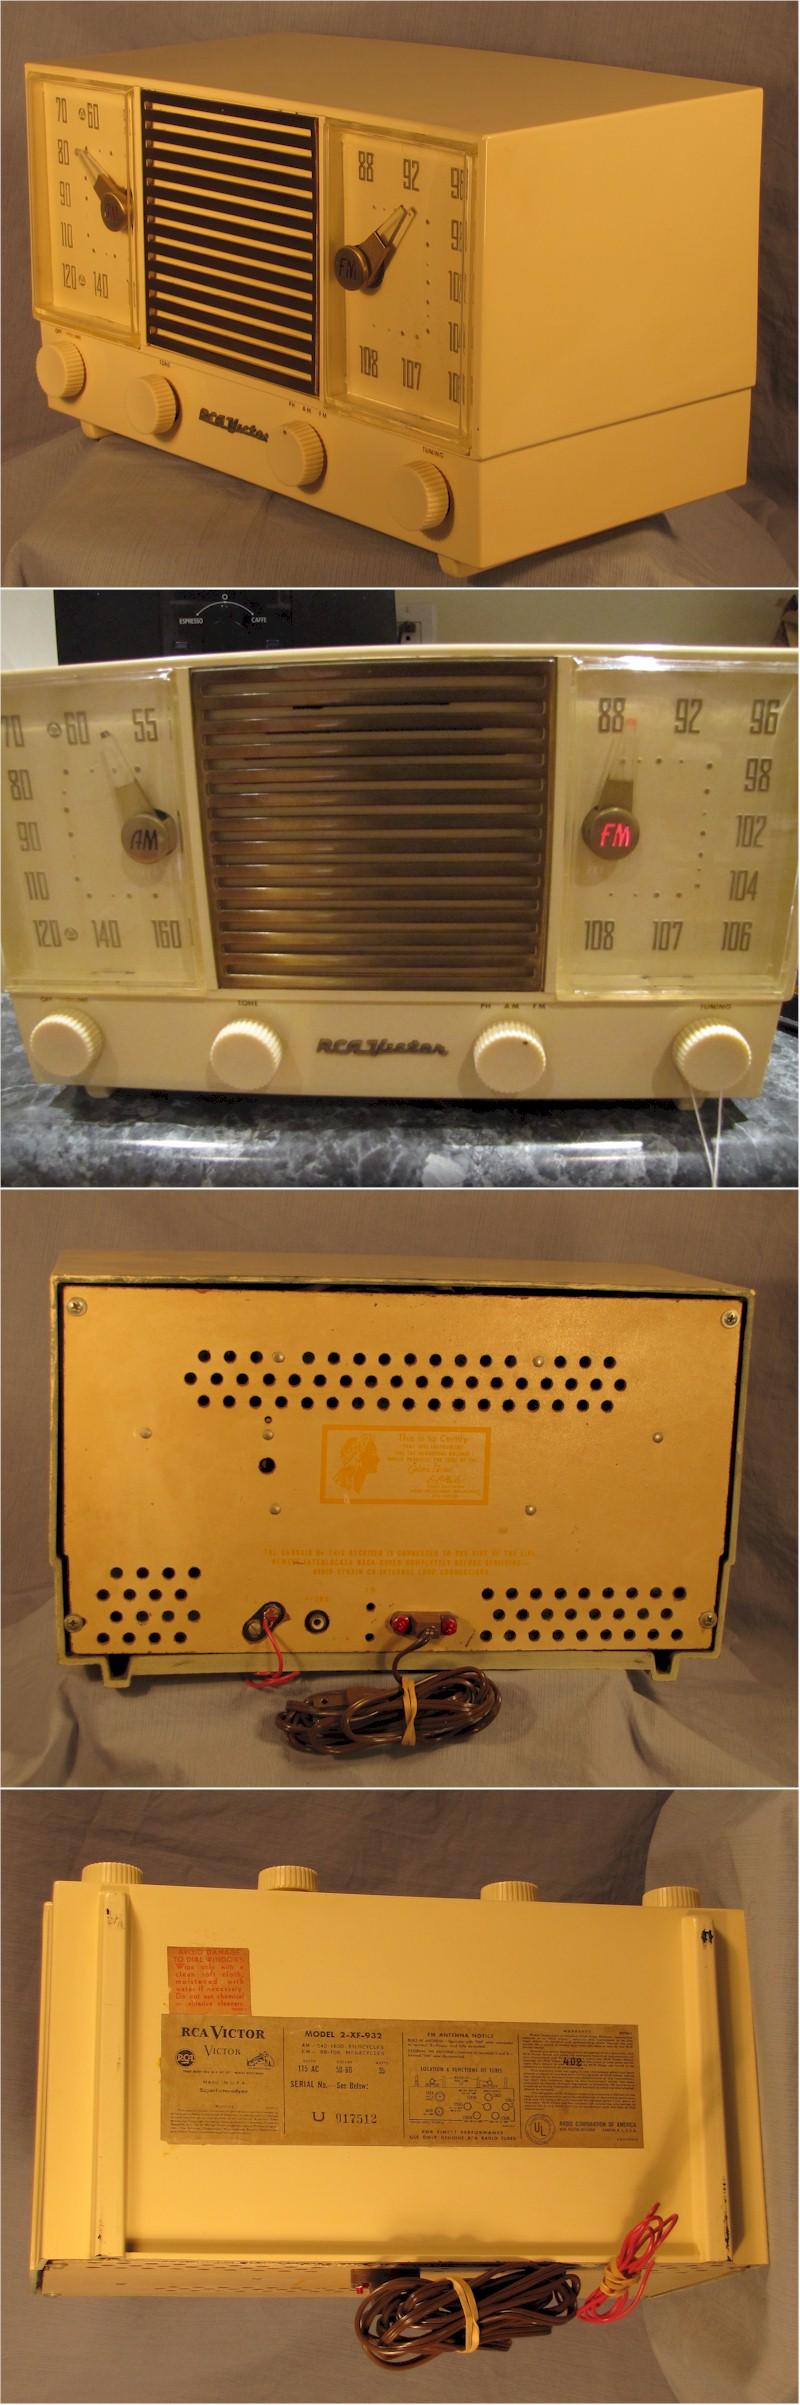 RCA Victor Clock Radio (1960s)